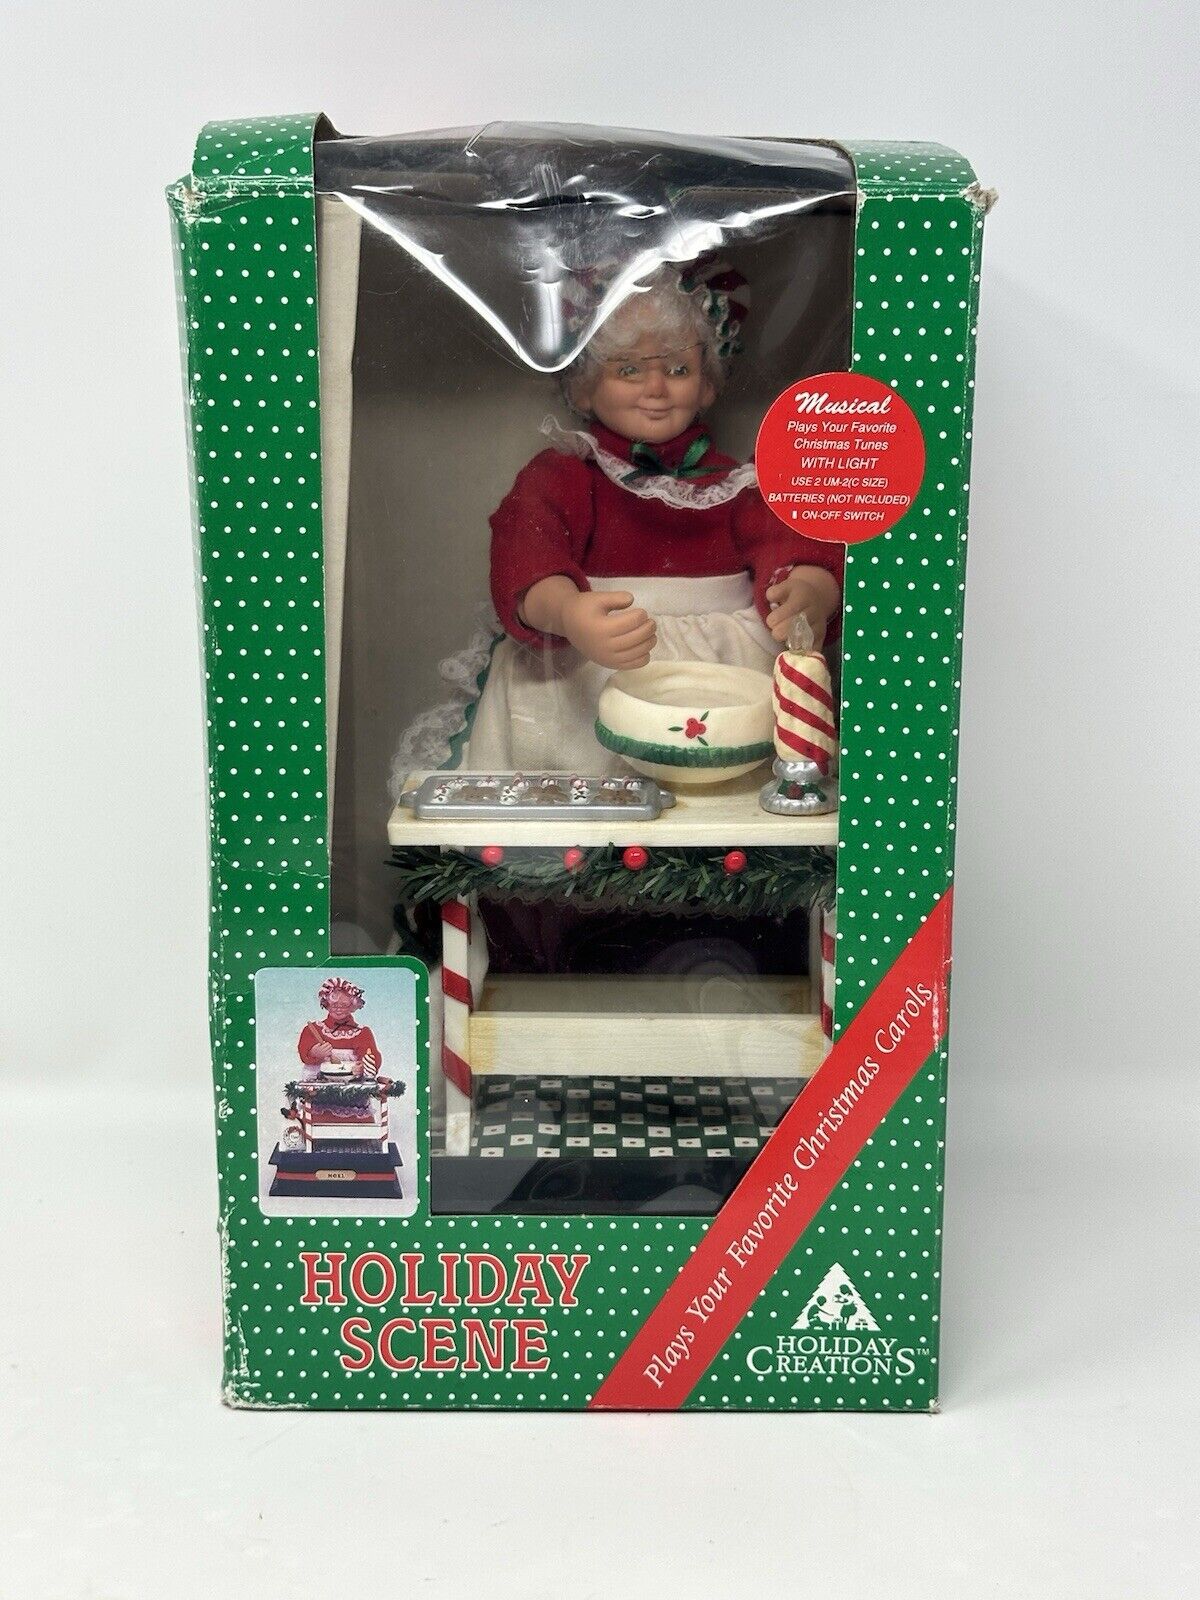 Vintage Holiday Creations Mrs. Santa Claus Baking Cookies Musical Scene 94